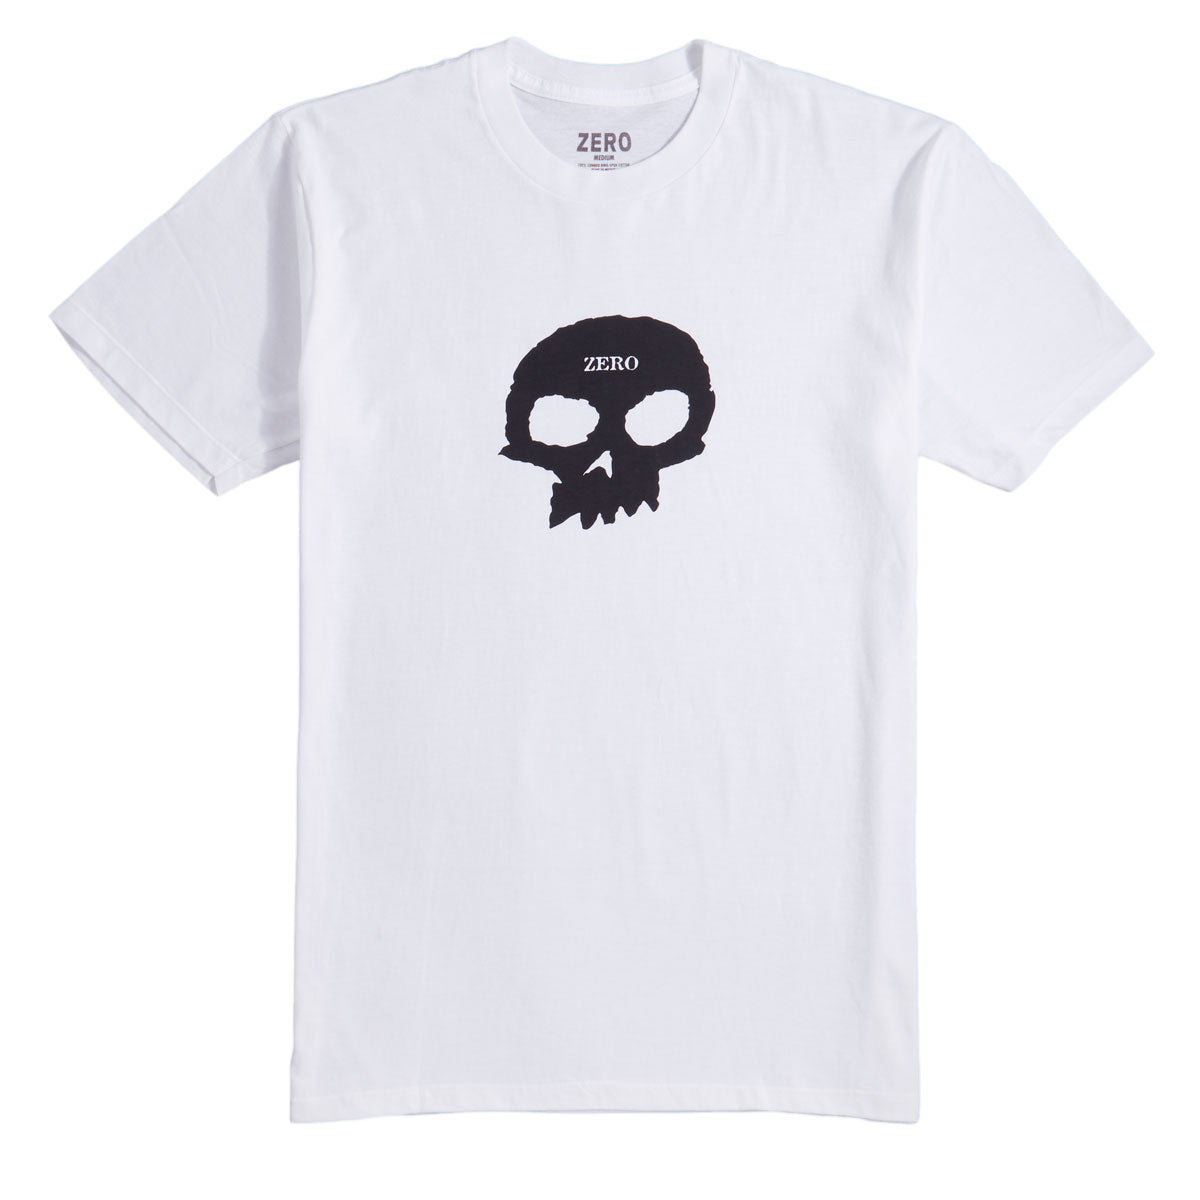 Zero Single Skull T-Shirt - White image 1